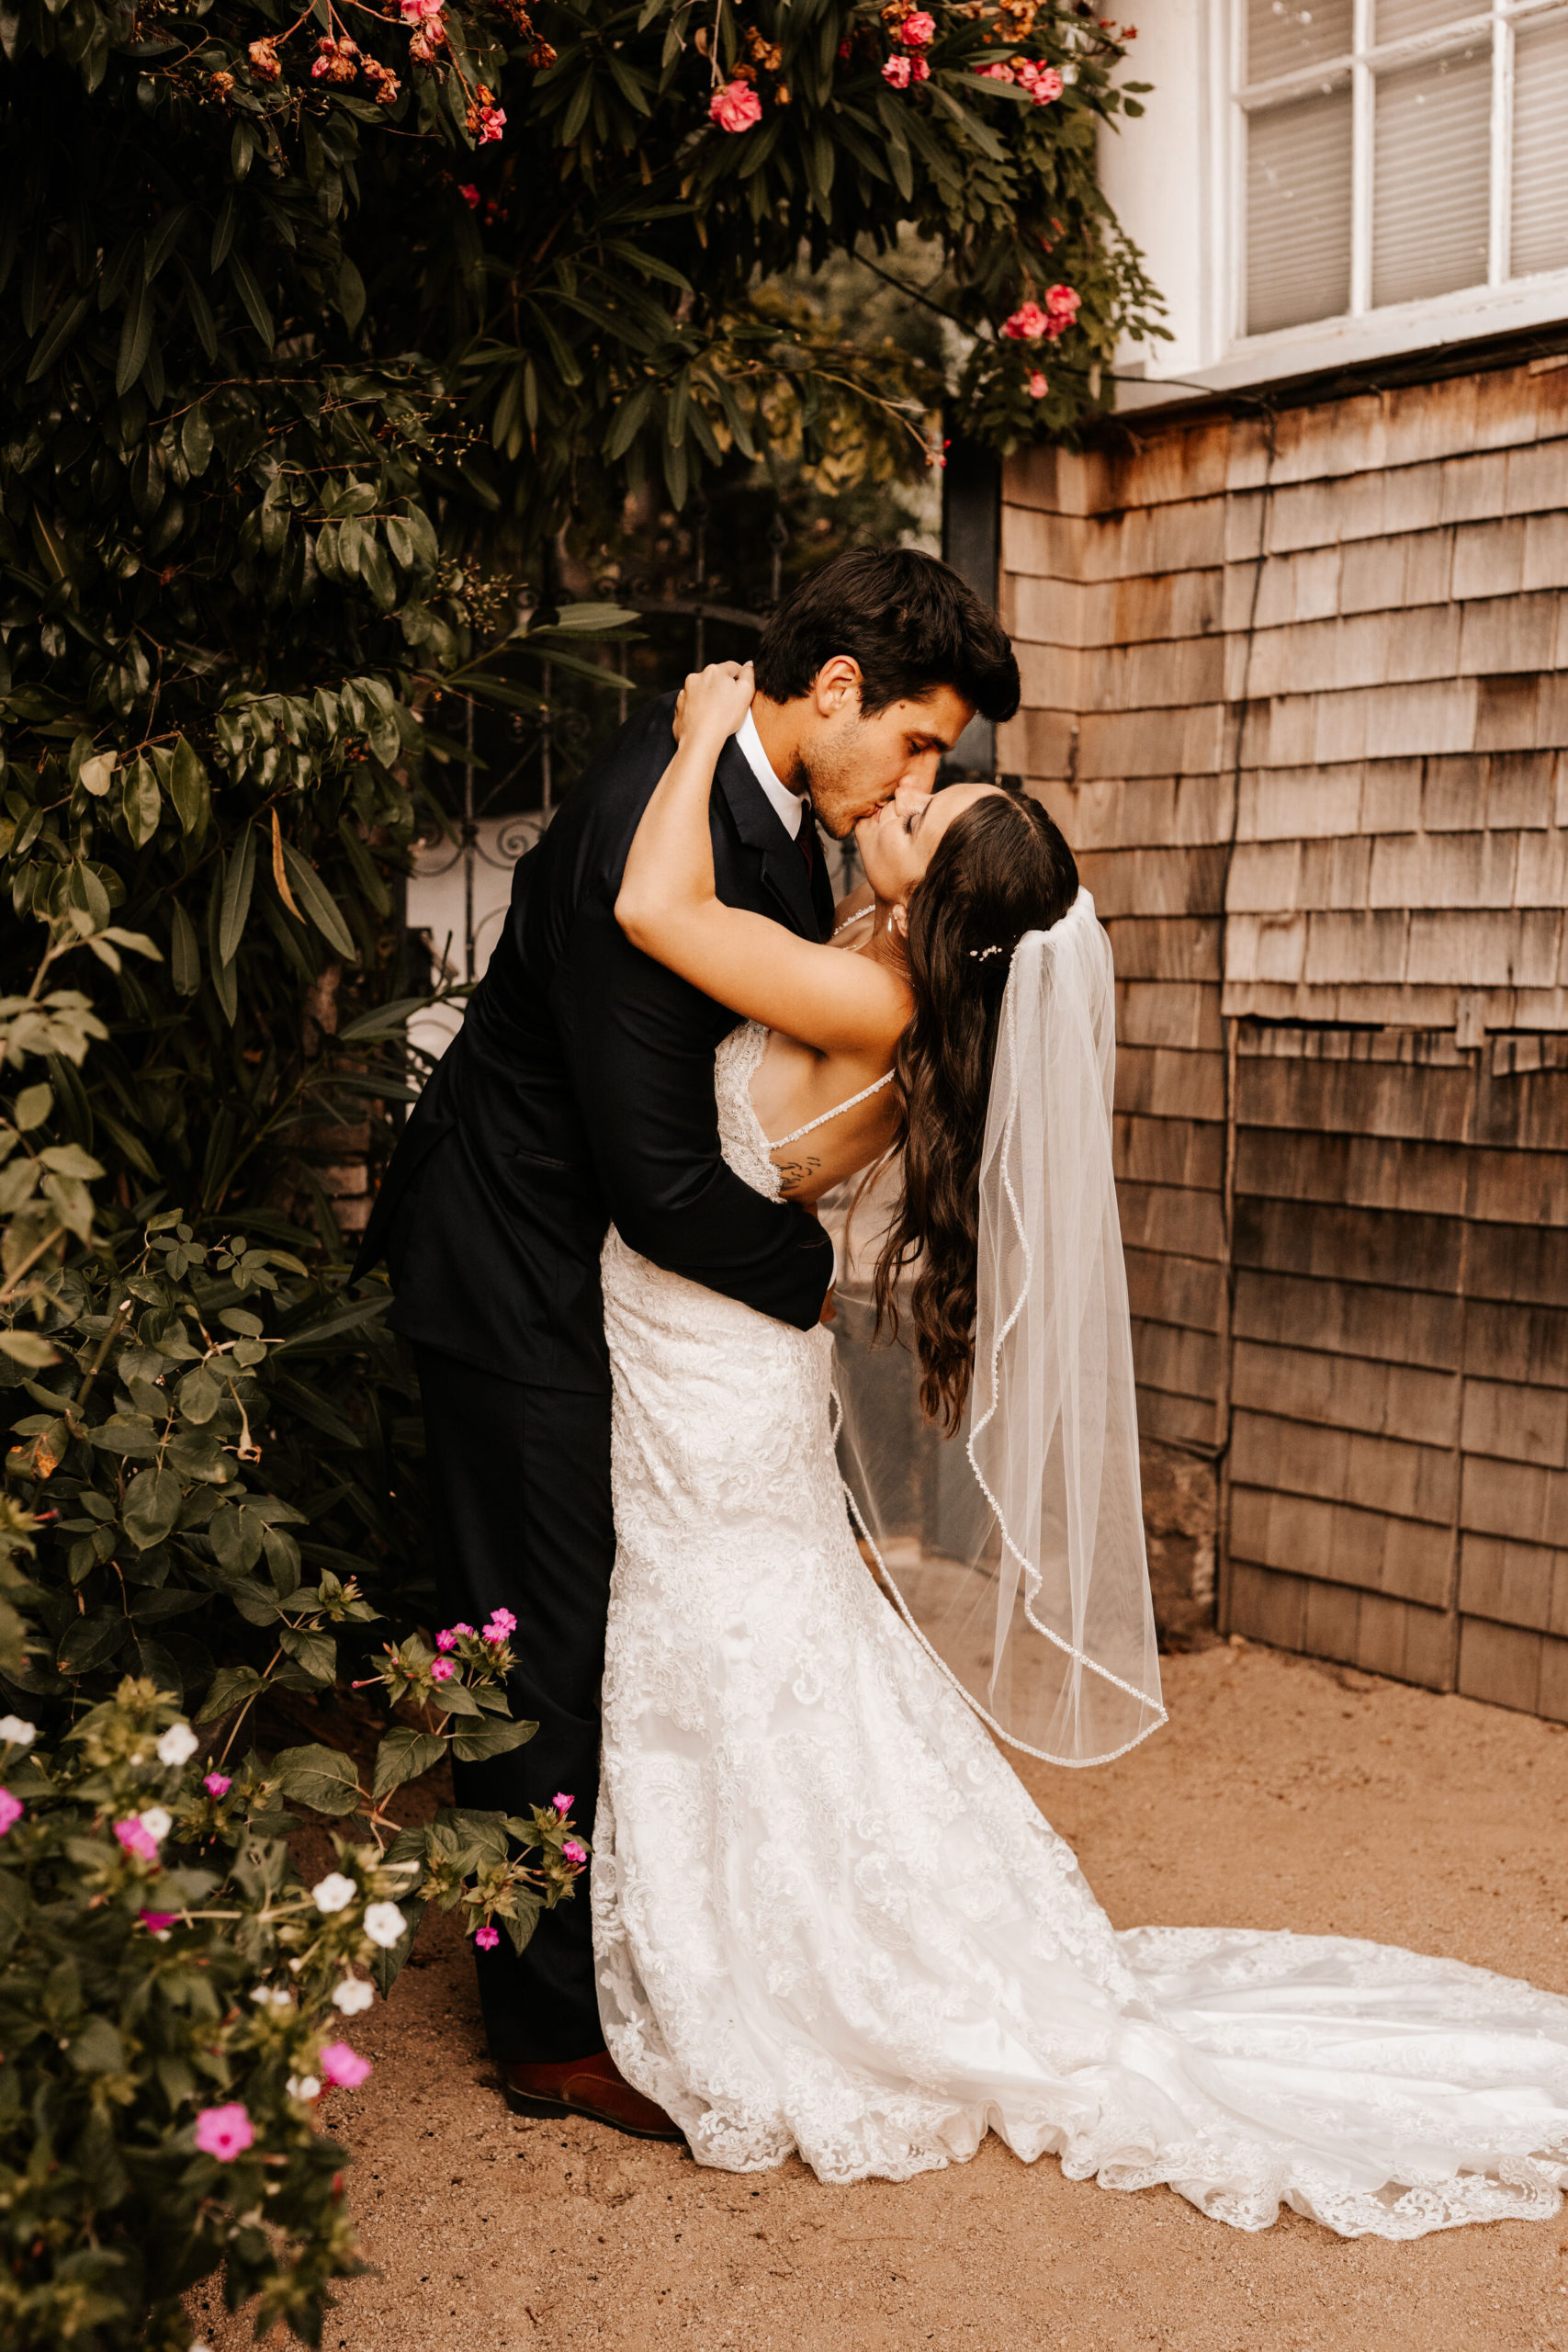 Kylee + Andrew -  Ross, California Backyard Summer Wedding185.jpg